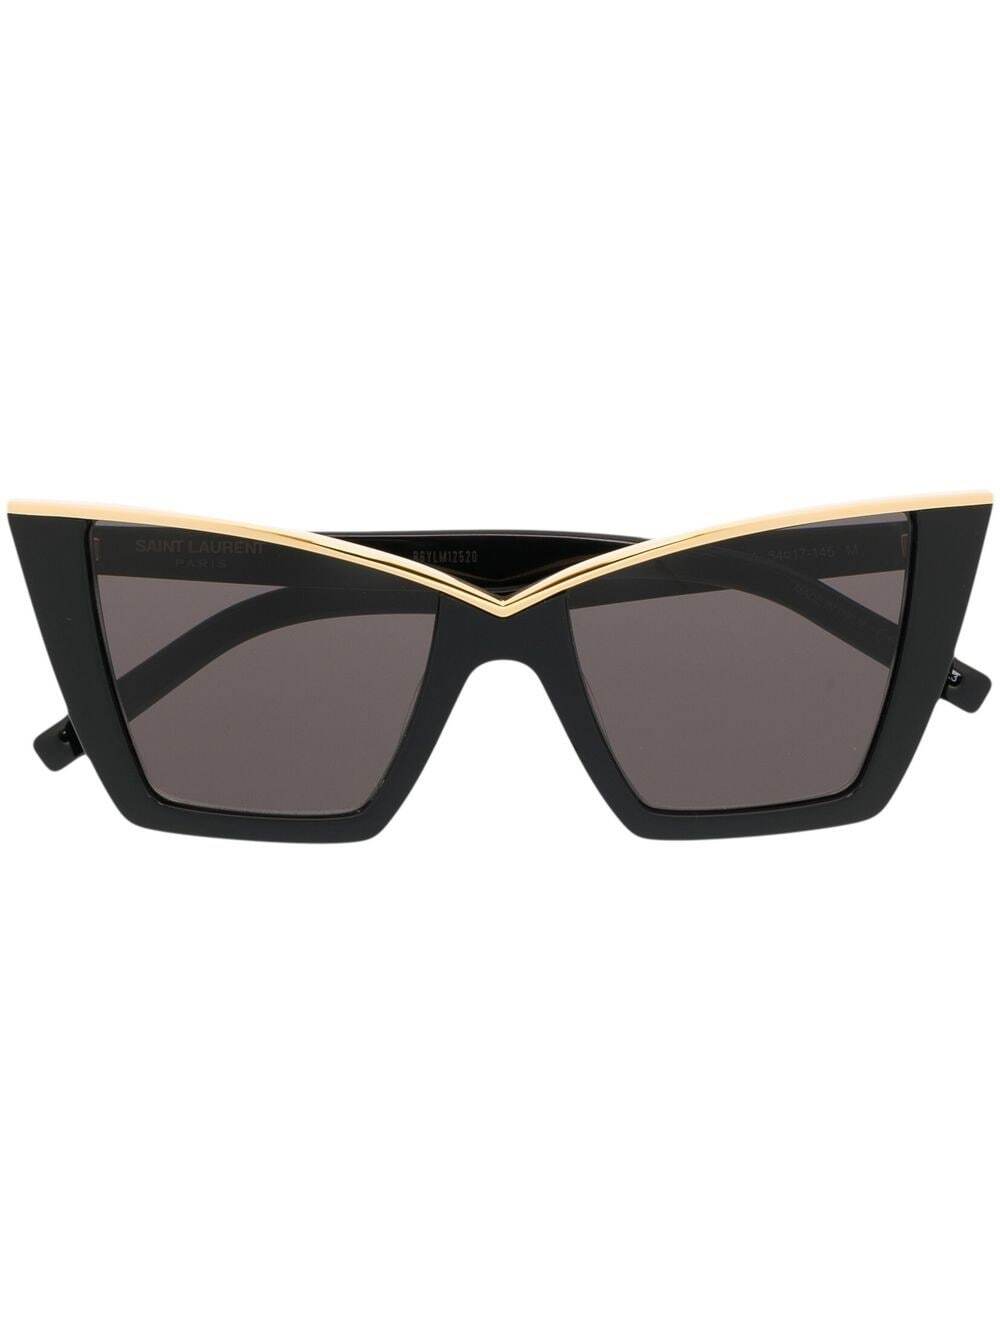 Saint Laurent Eyewear SL570 cat-eye sunglasses - Black